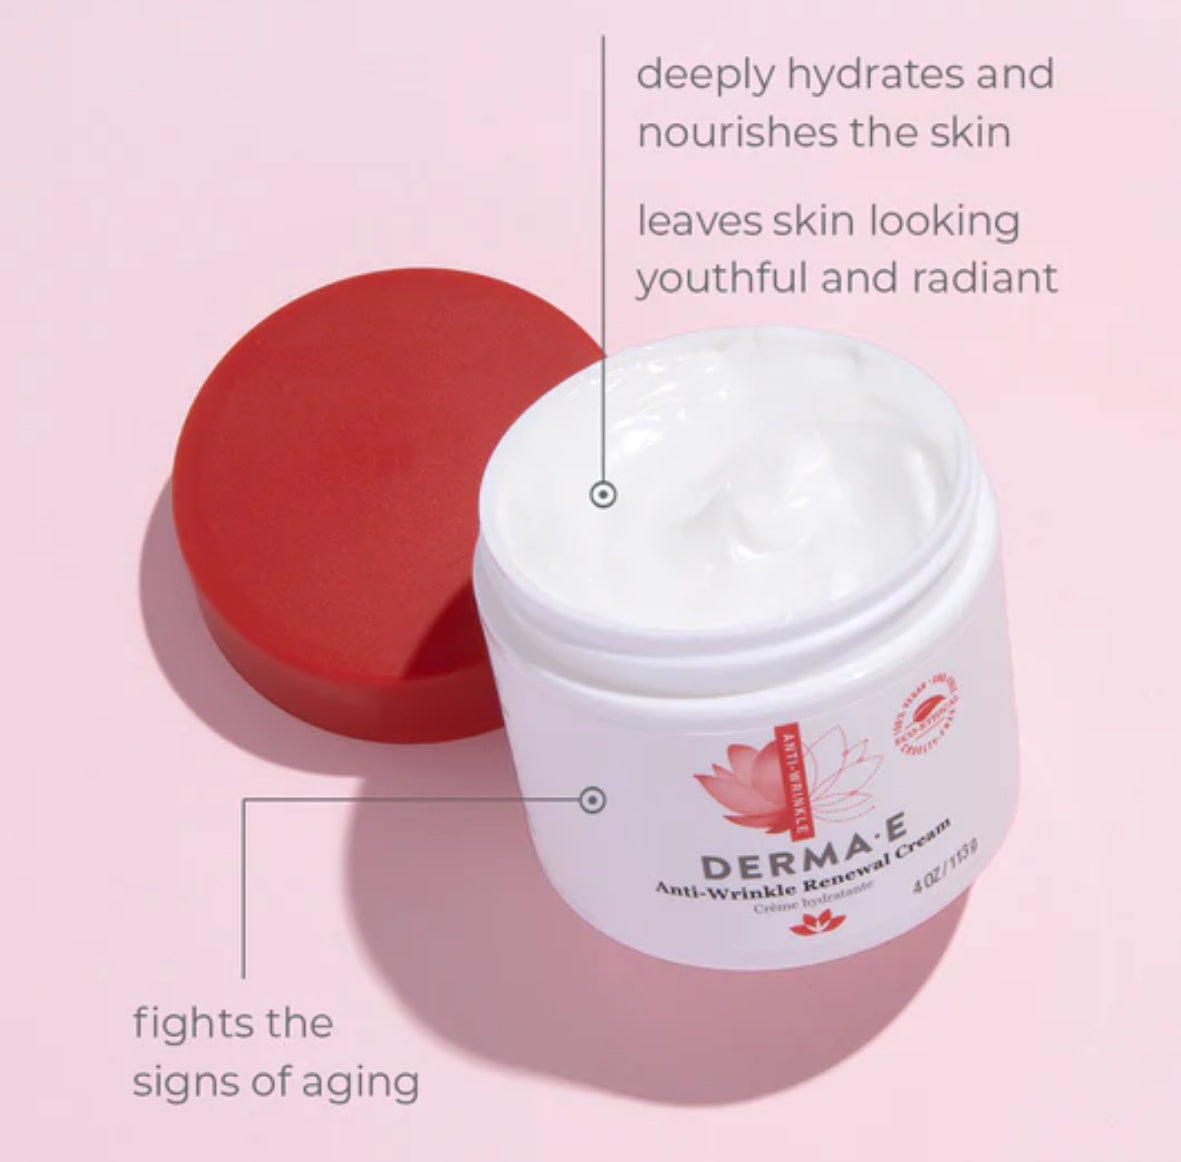 DERMA E anti wrinkle renewal cream